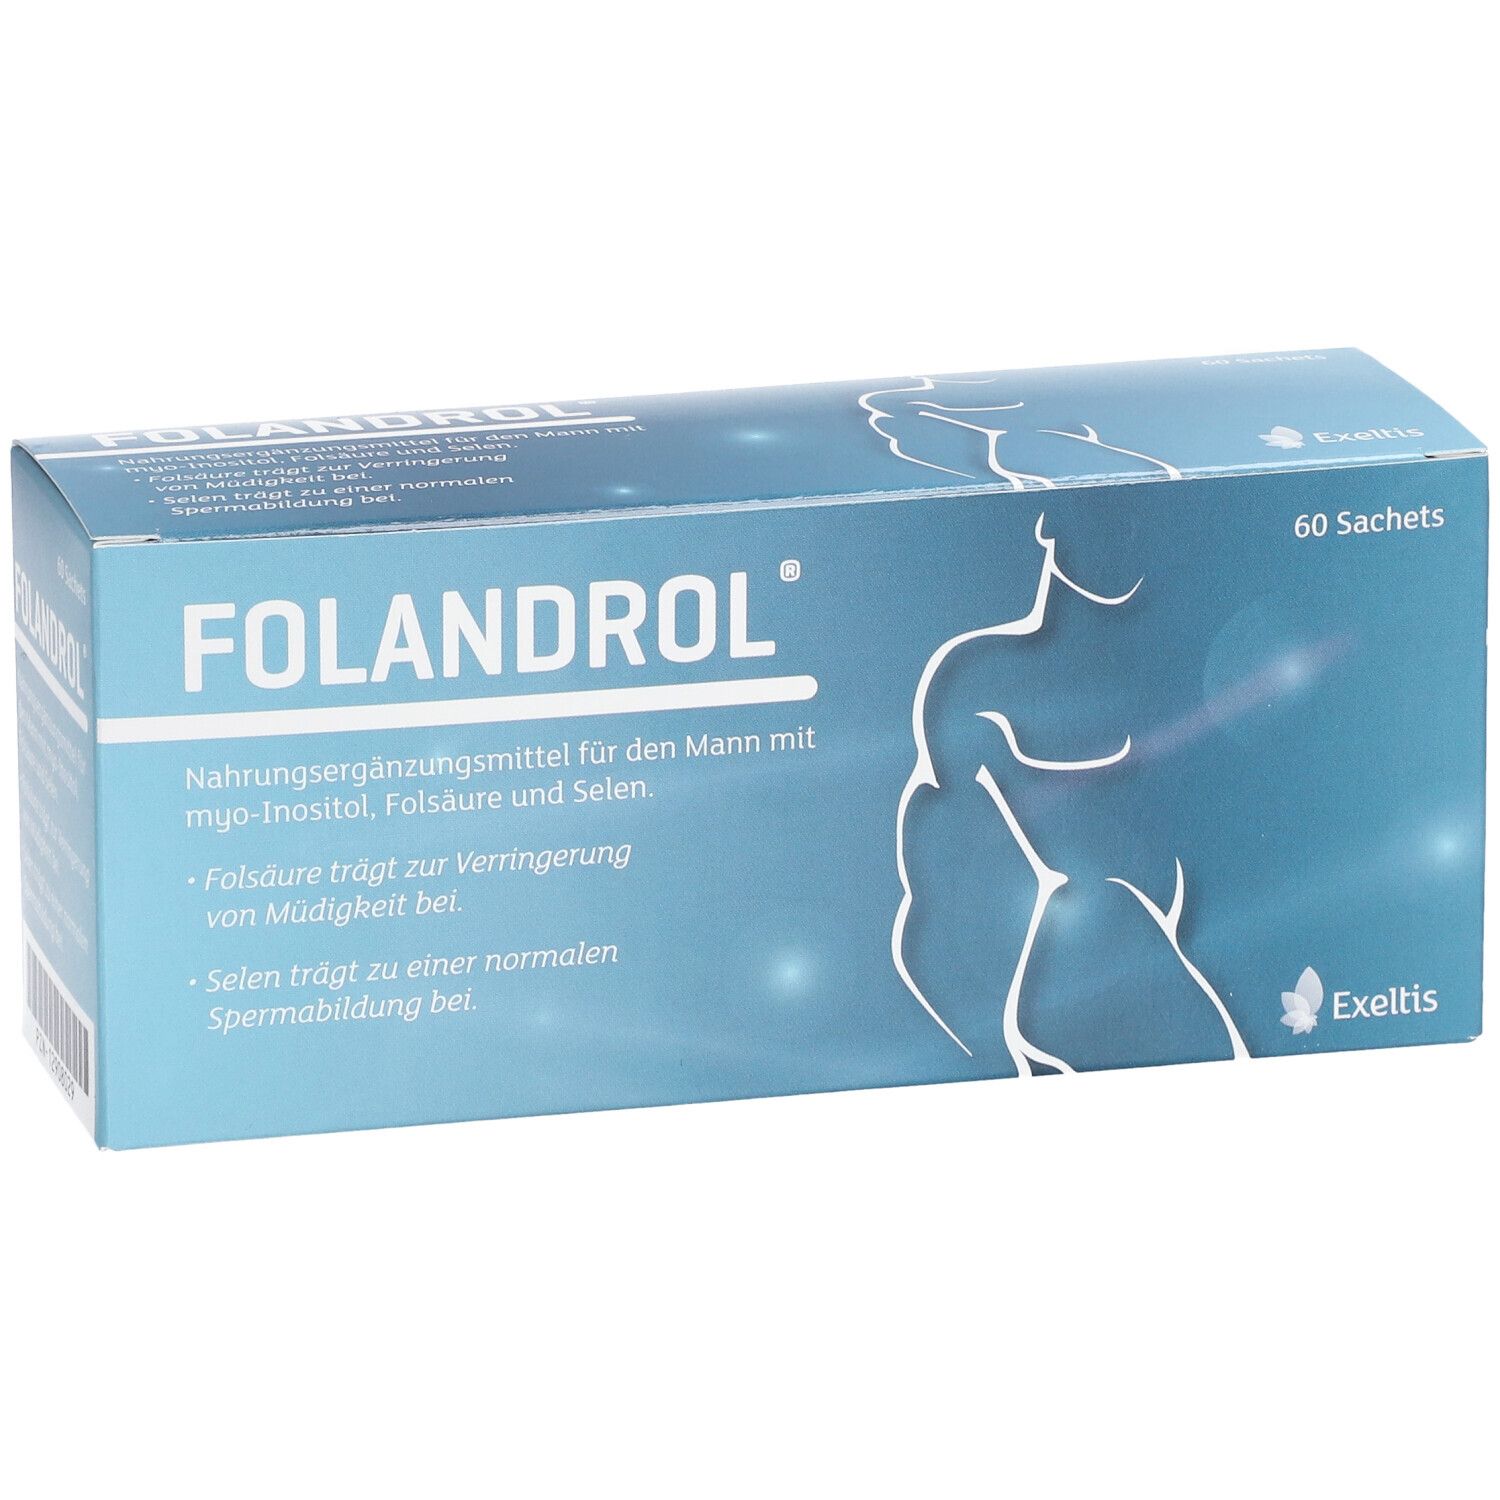 Folandrol®